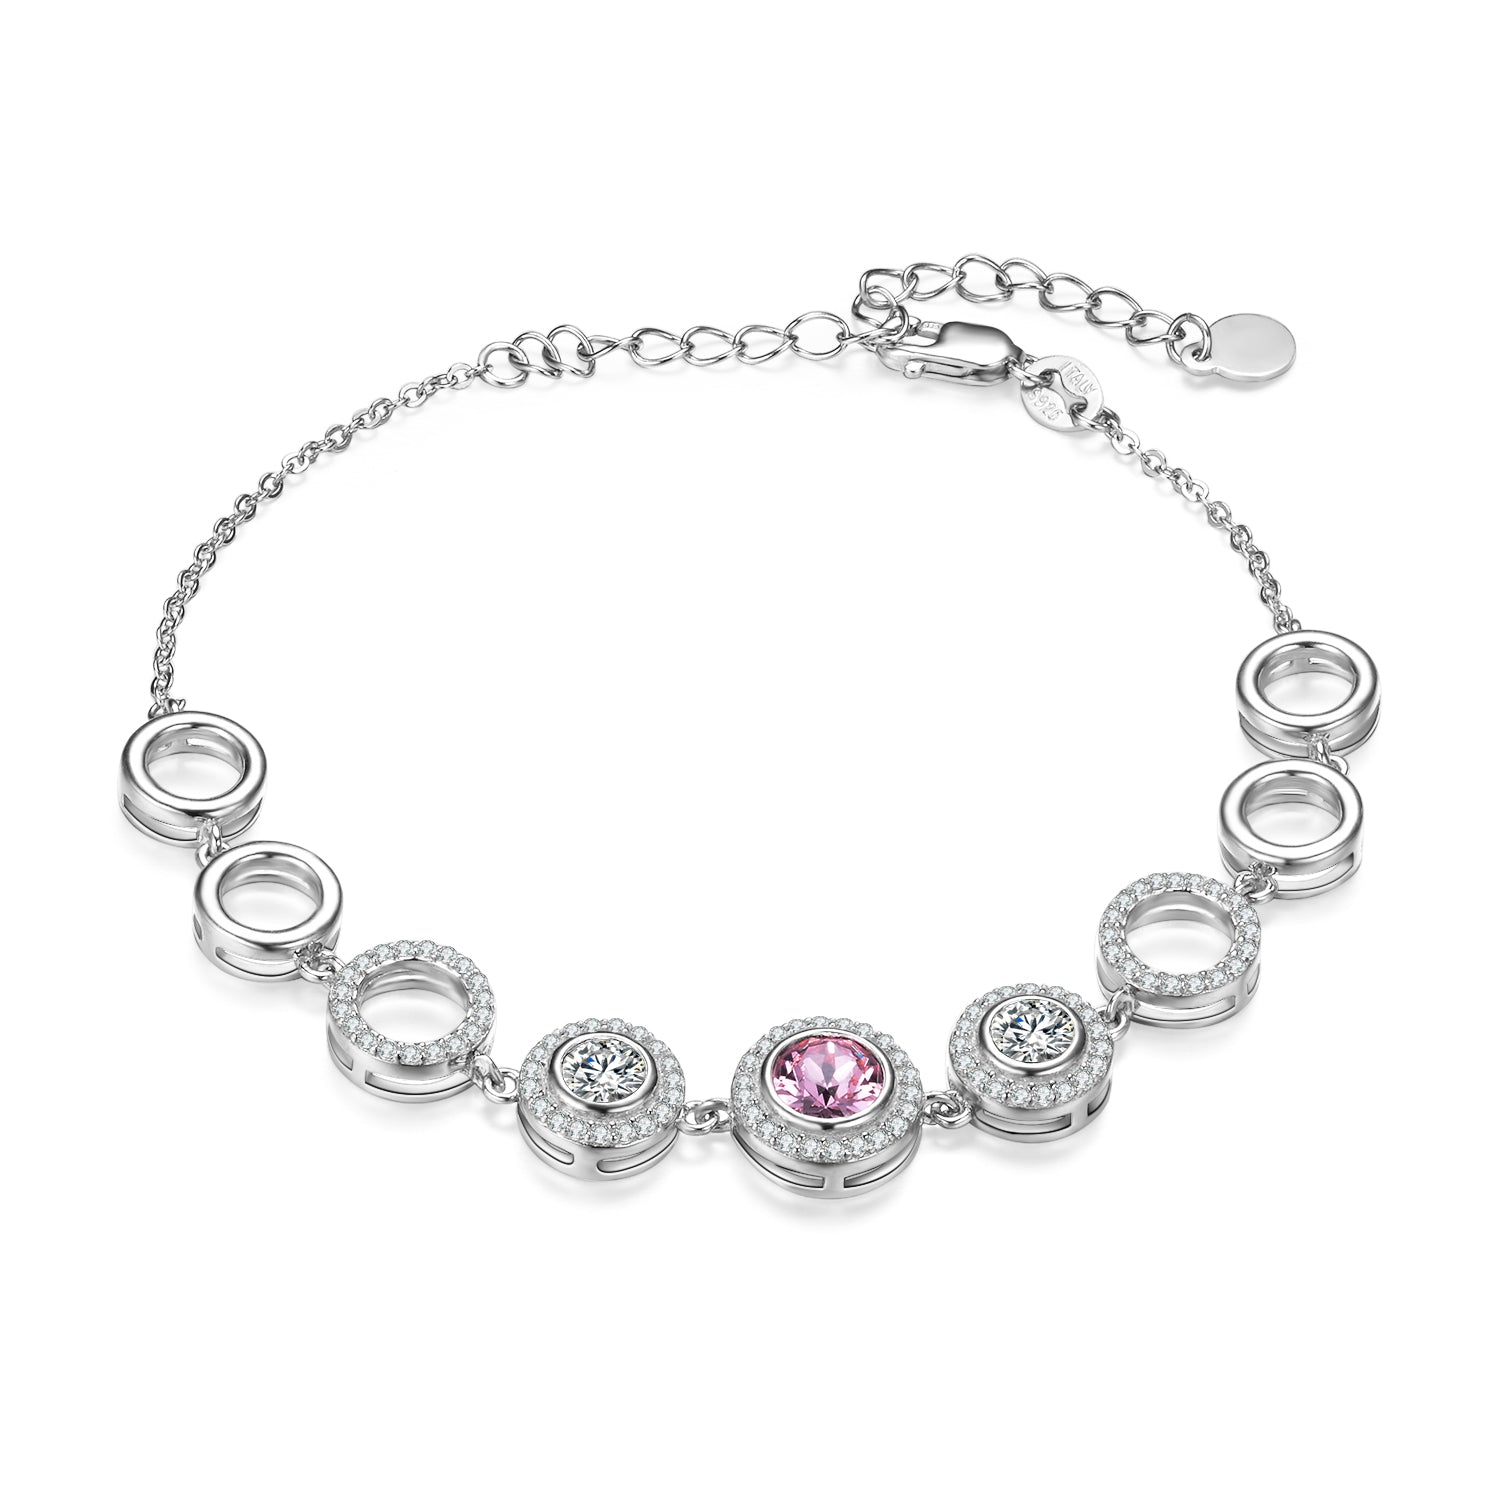 Simple Bracelet Designs For Women Gemstone Colorful Bracelet Silver